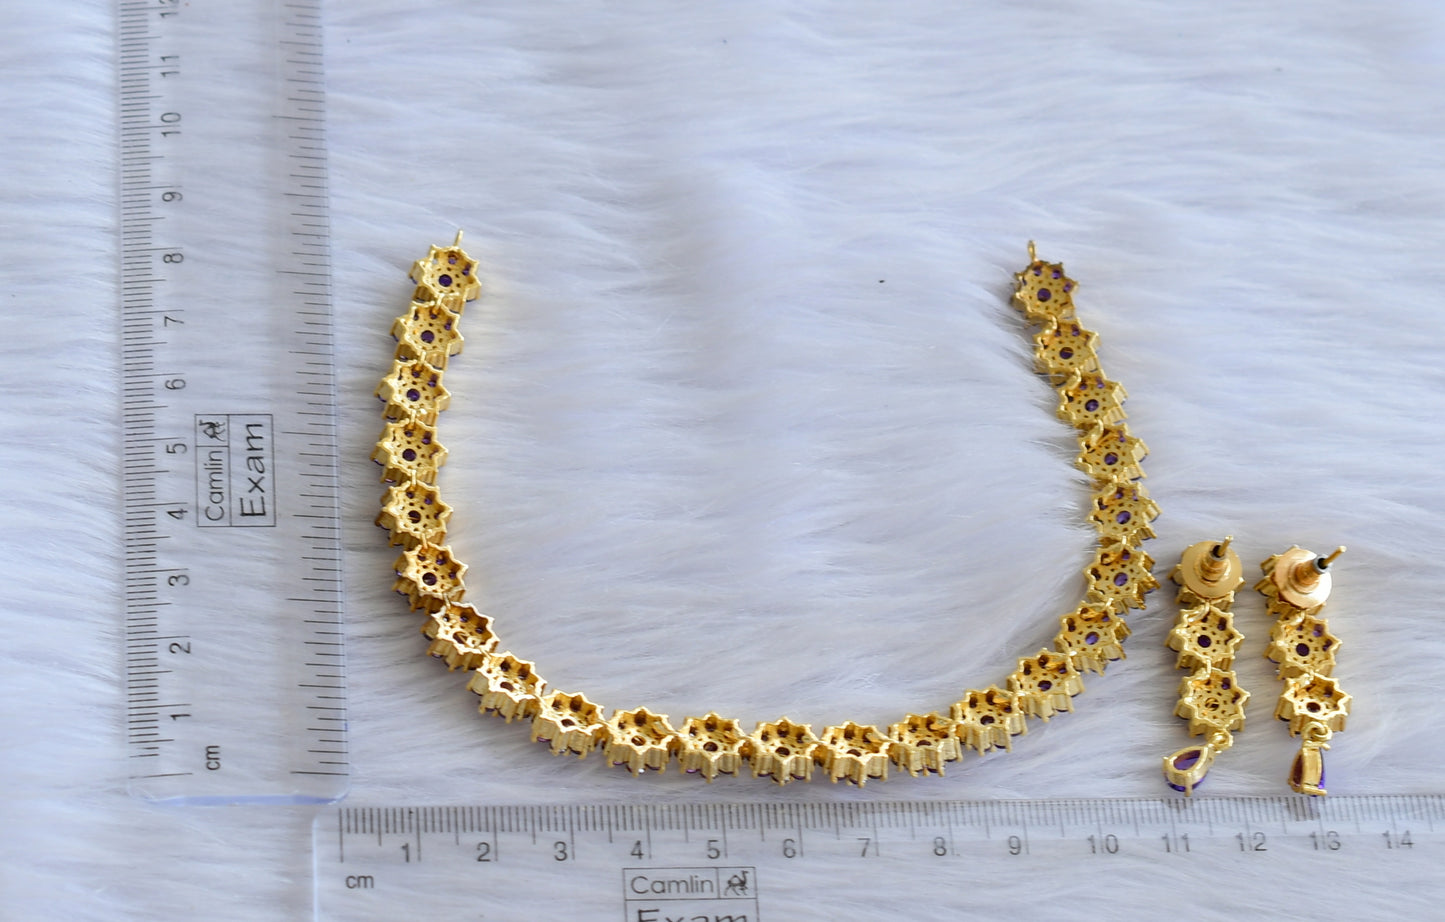 Gold tone ad purple stone flower necklace set dj-44880